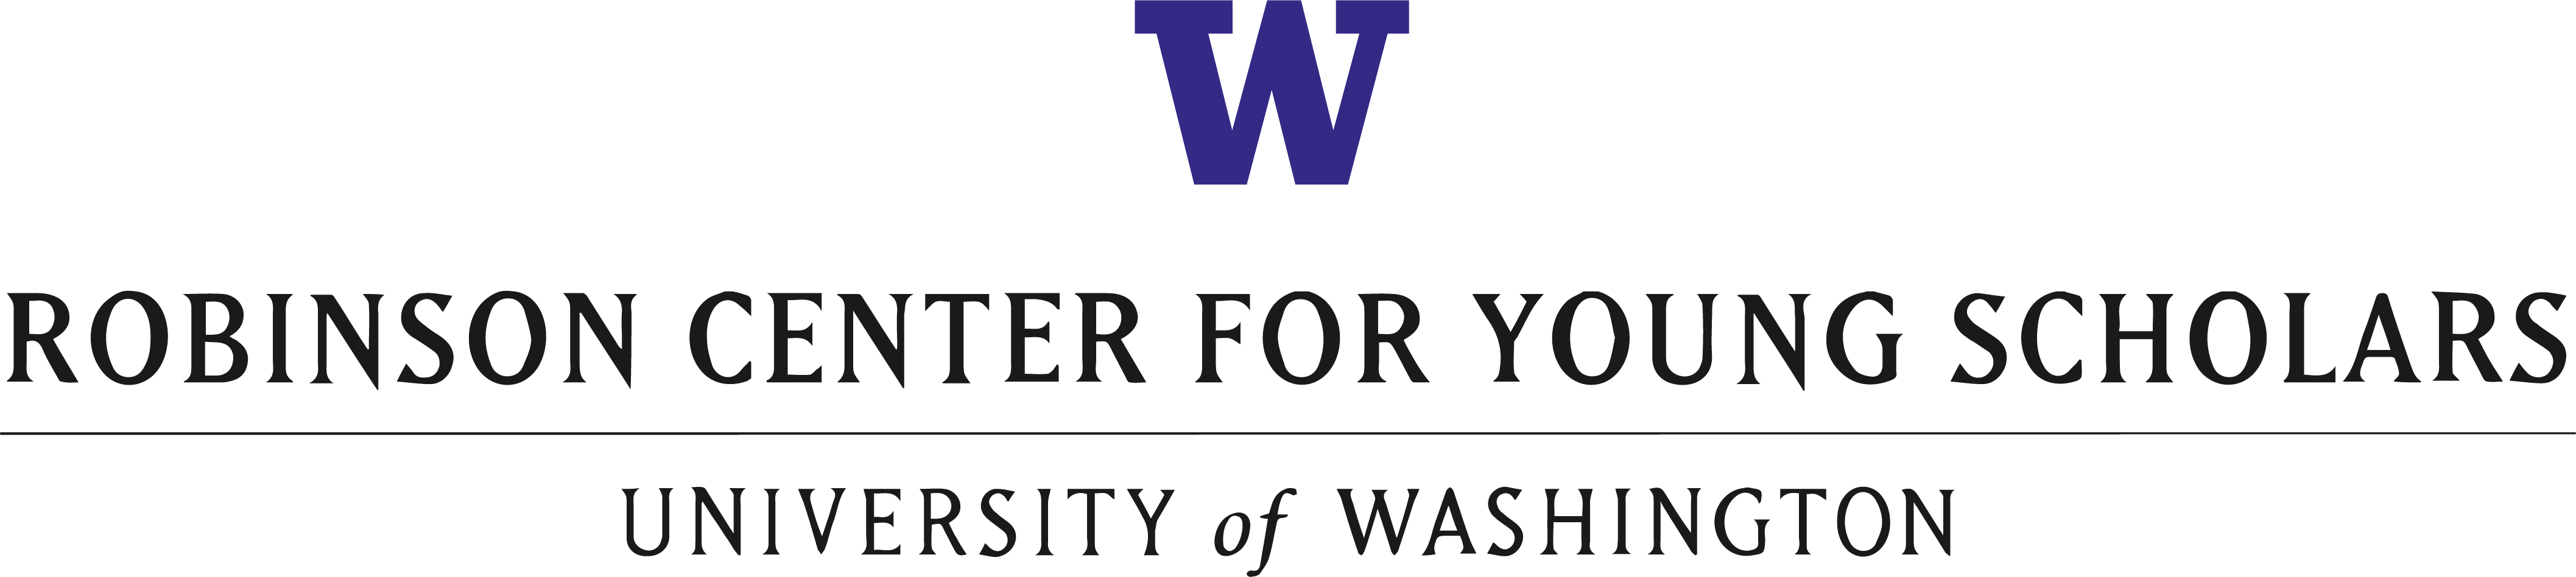 UW Robinson Center for Young Scholars Logo